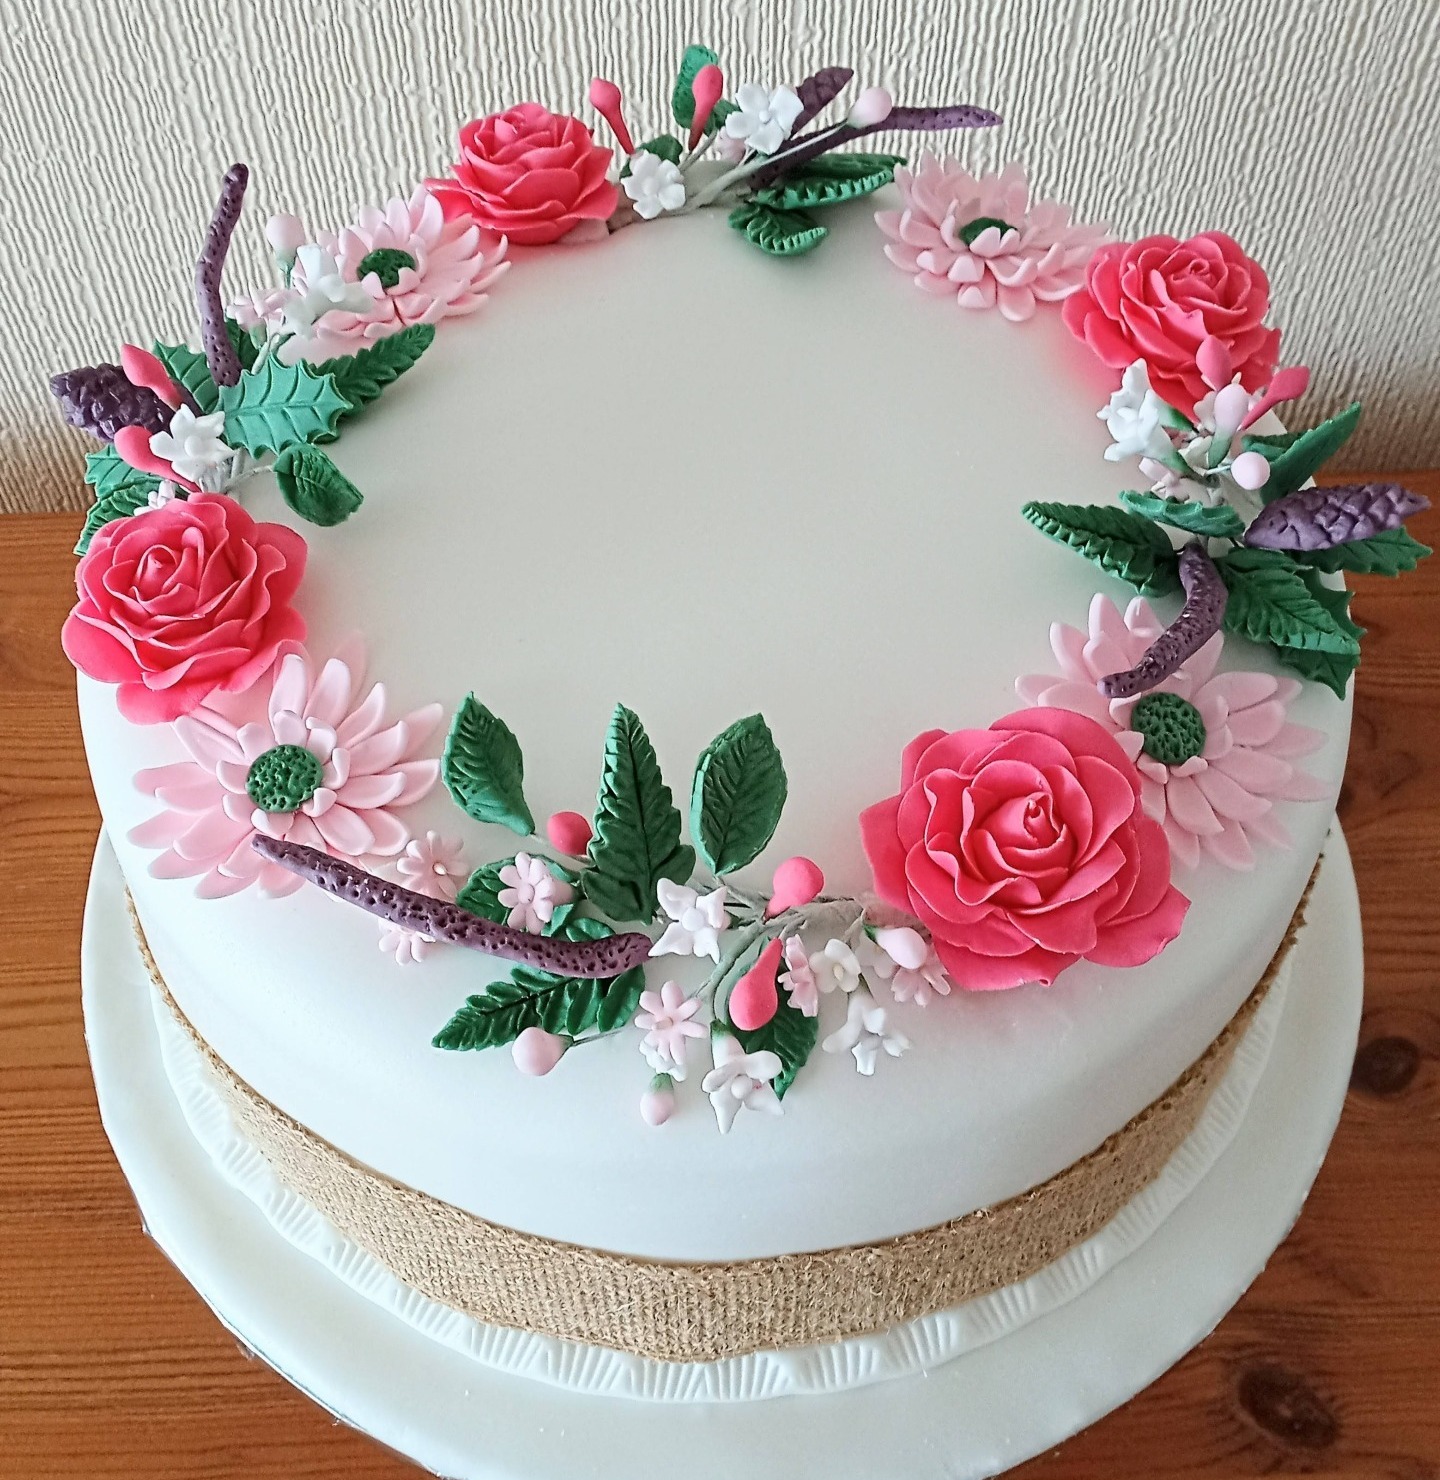 10 inch single tier wedding cake with sugar flowers